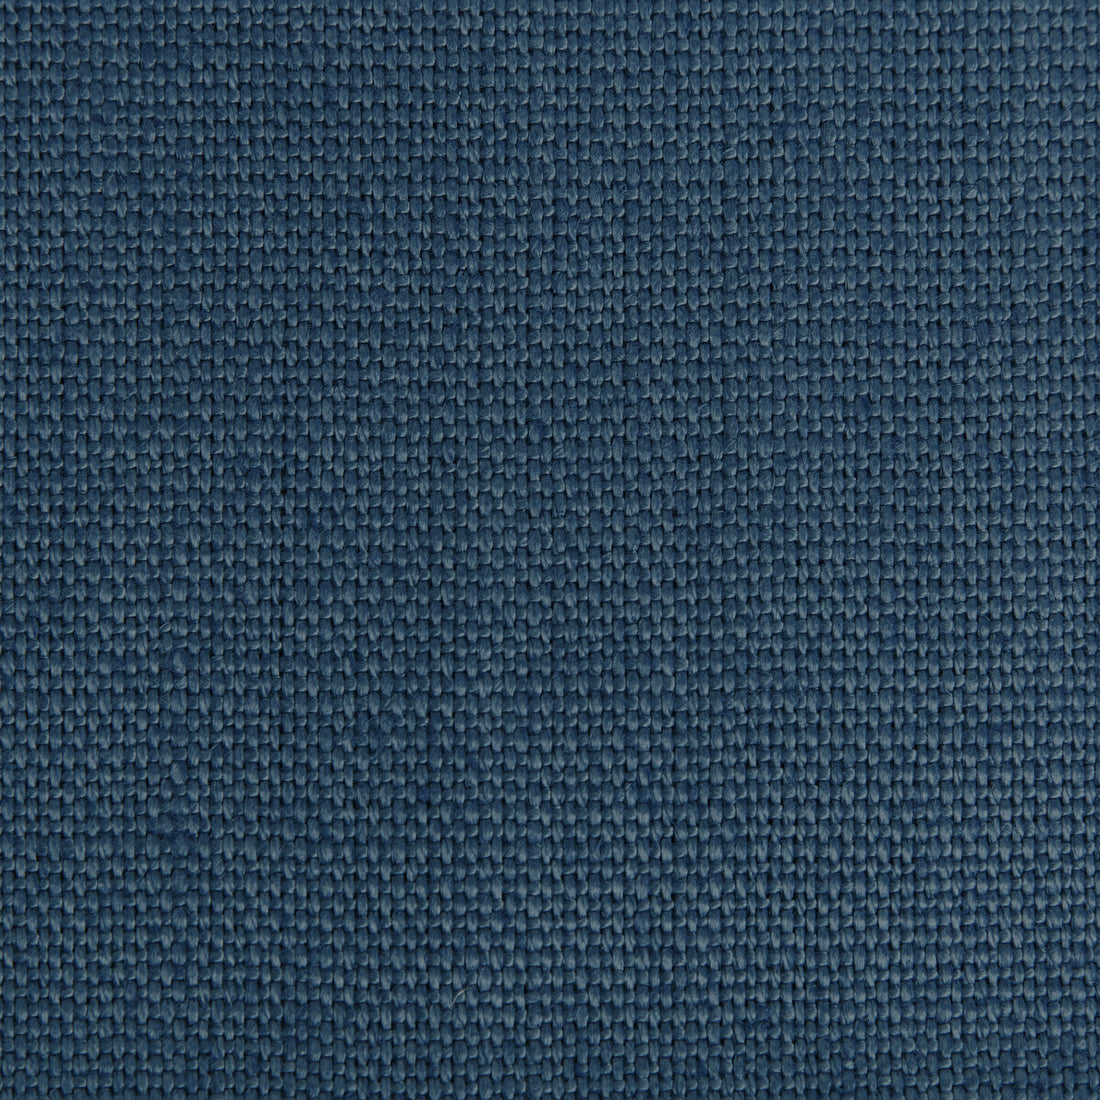 Kravet Design fabric in 32787-5 color - pattern 32787.5.0 - by Kravet Design in the Exotic Travels collection